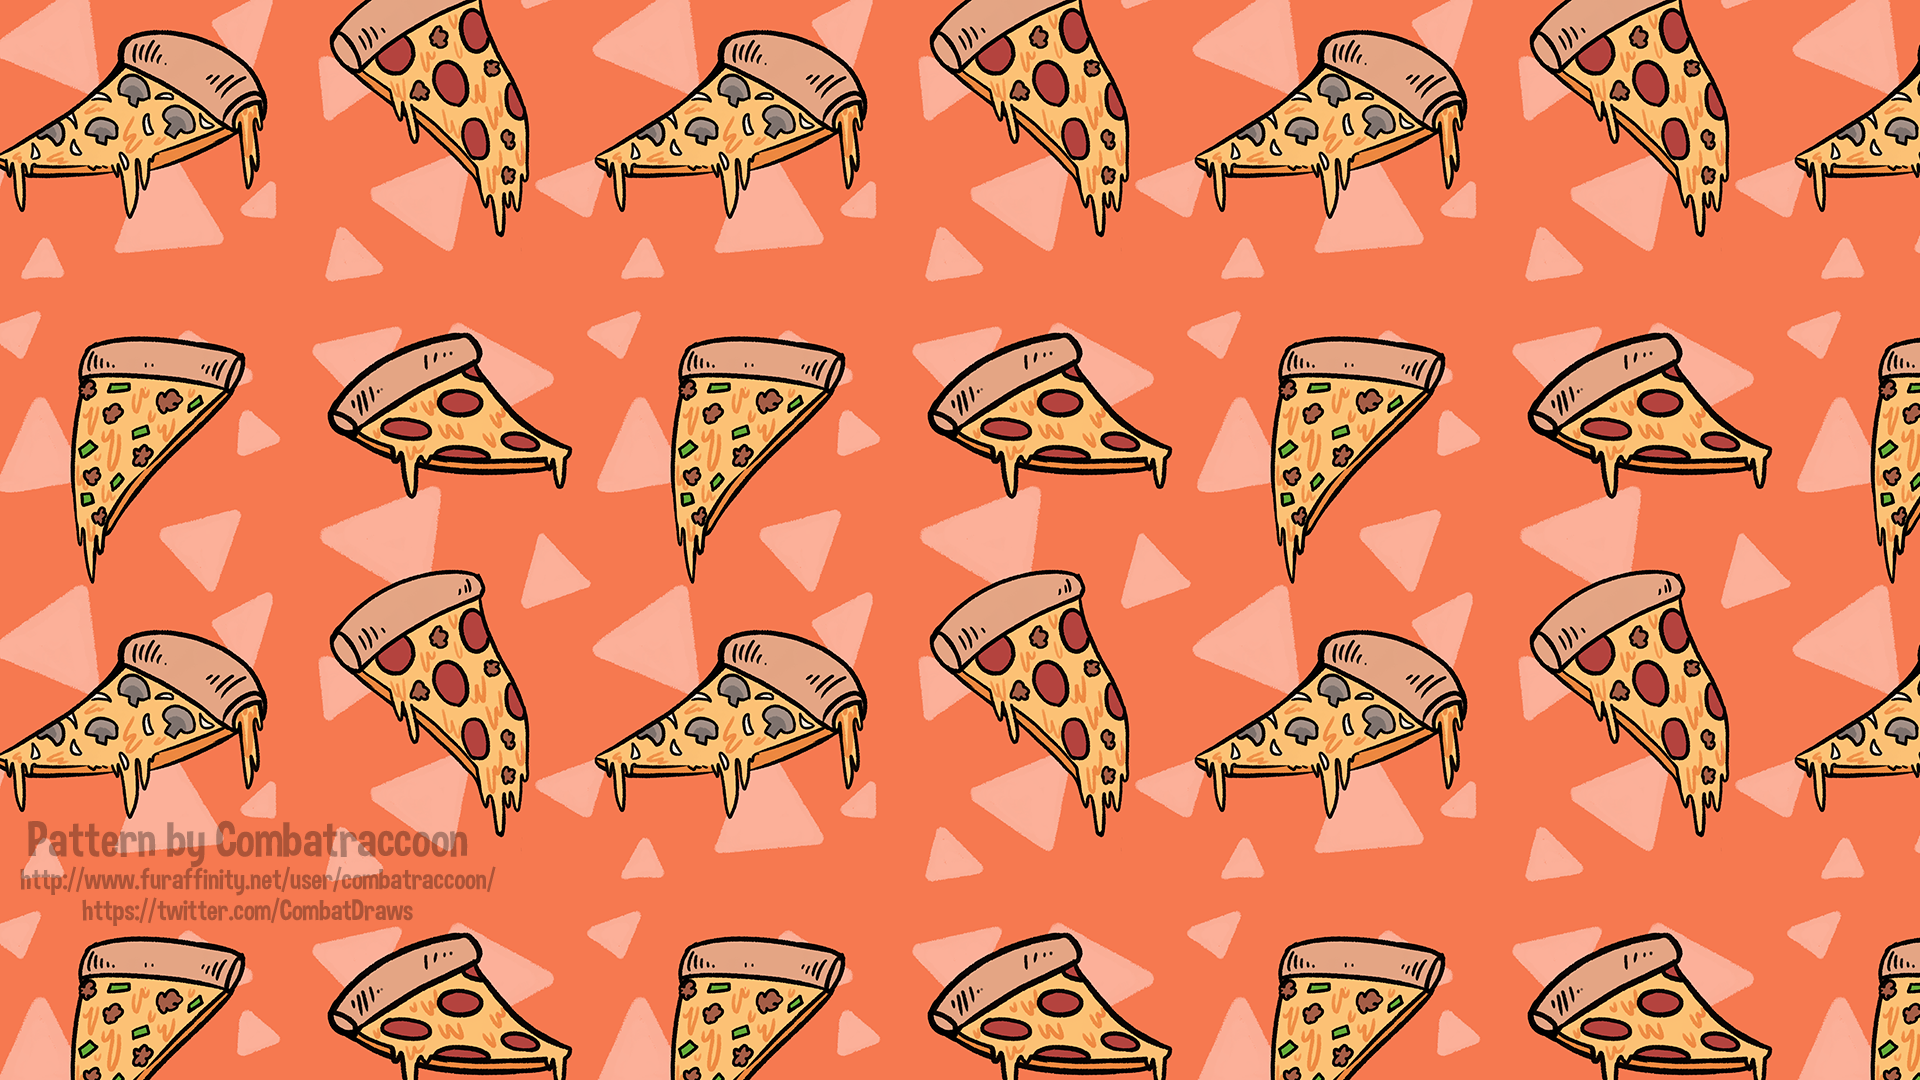 Wallpaper pizza, tomato, 5k, Food #16055